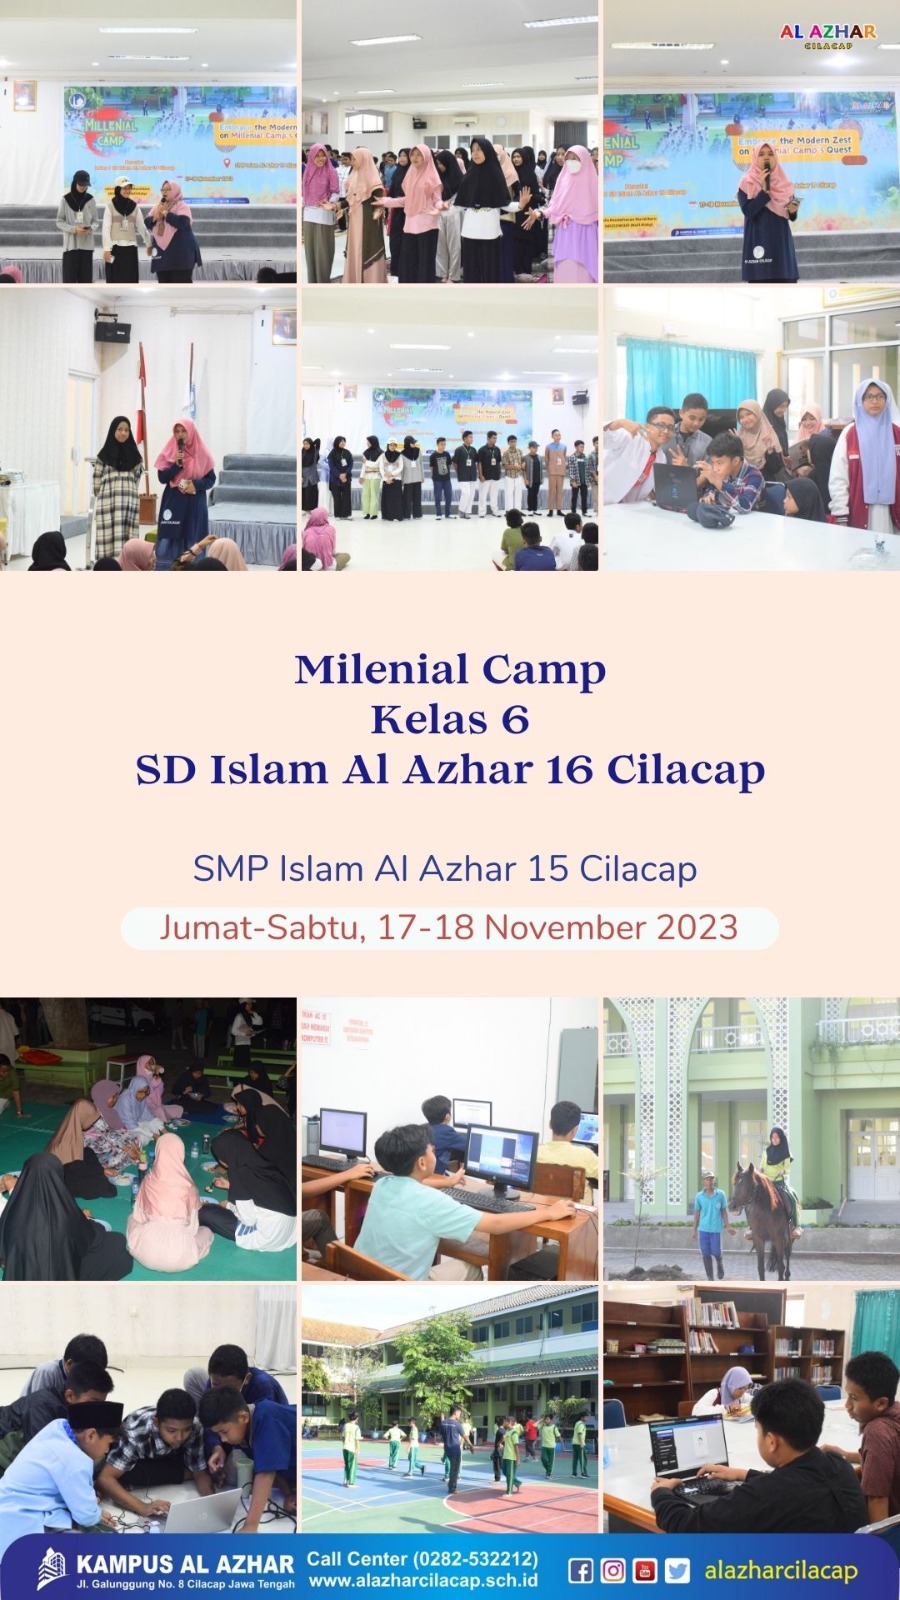 Milenial Camp: Mempererat Sinergi, Memperkenalkan, dan Menginspirasi Generasi Muda di SMP Islam Al Azhar 15 Cilacap